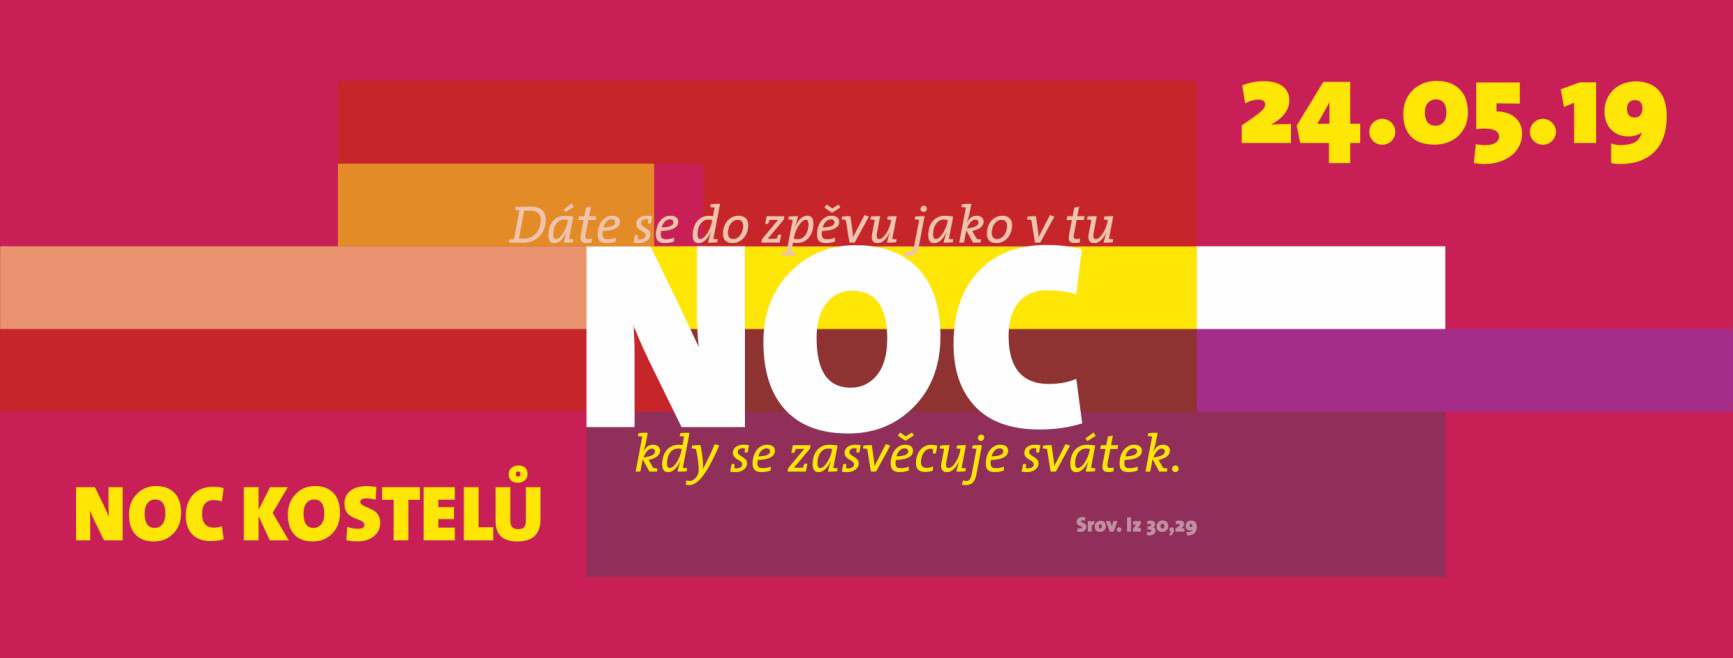 noc_kost_2019_logo.png